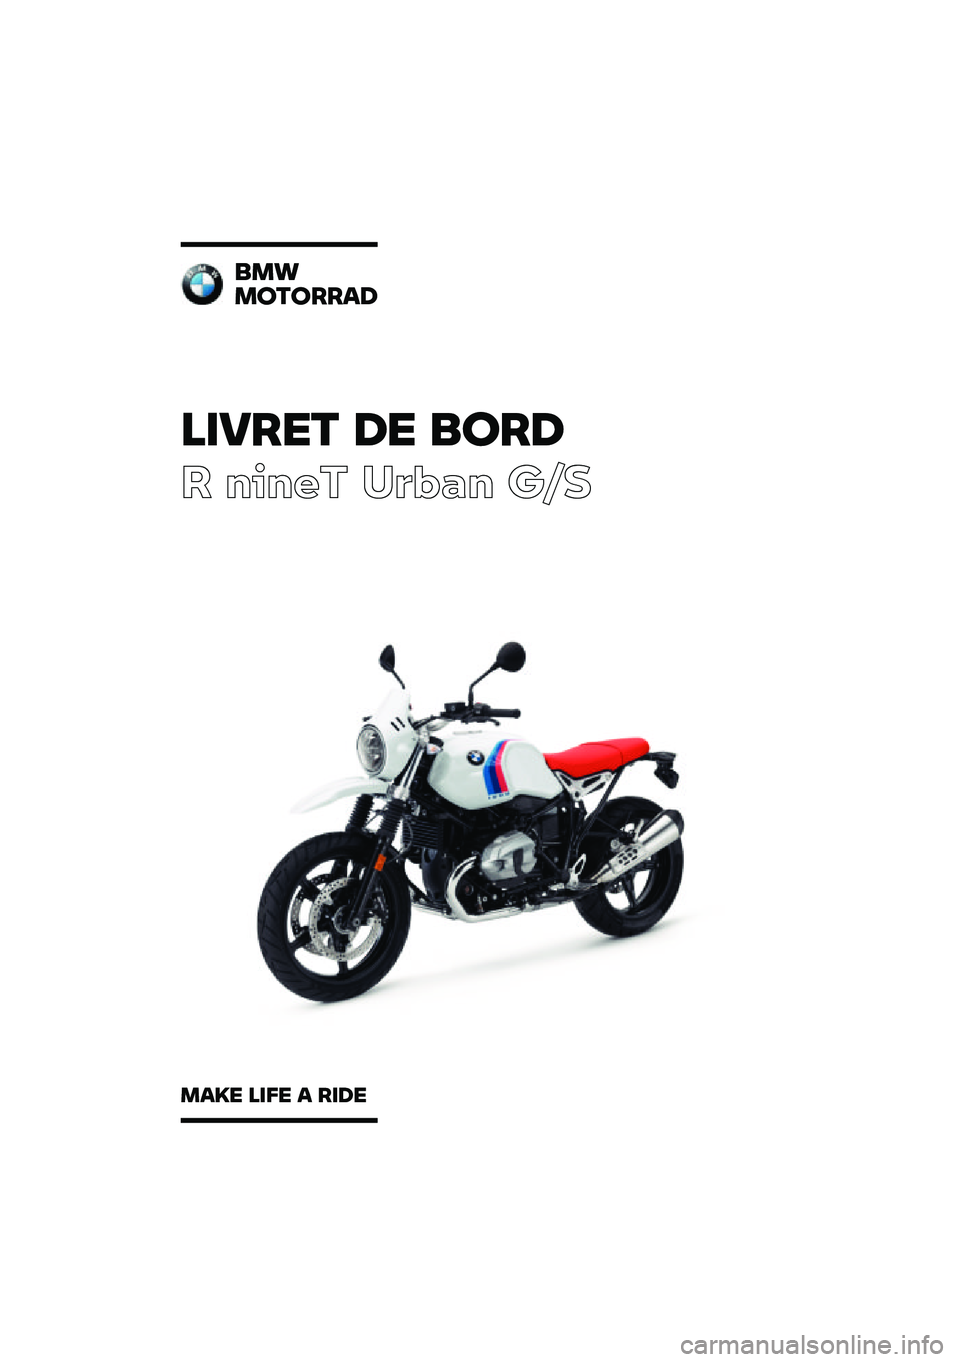 BMW MOTORRAD R NINE T URVAN G/S 2020  Livret de bord (in French) ������ �\b� �	�
��\b
� ����� ��\b�	�
� ��\f�
�	��\f
��
��
���
�\b
��
�� ���� �
 ���\b� 